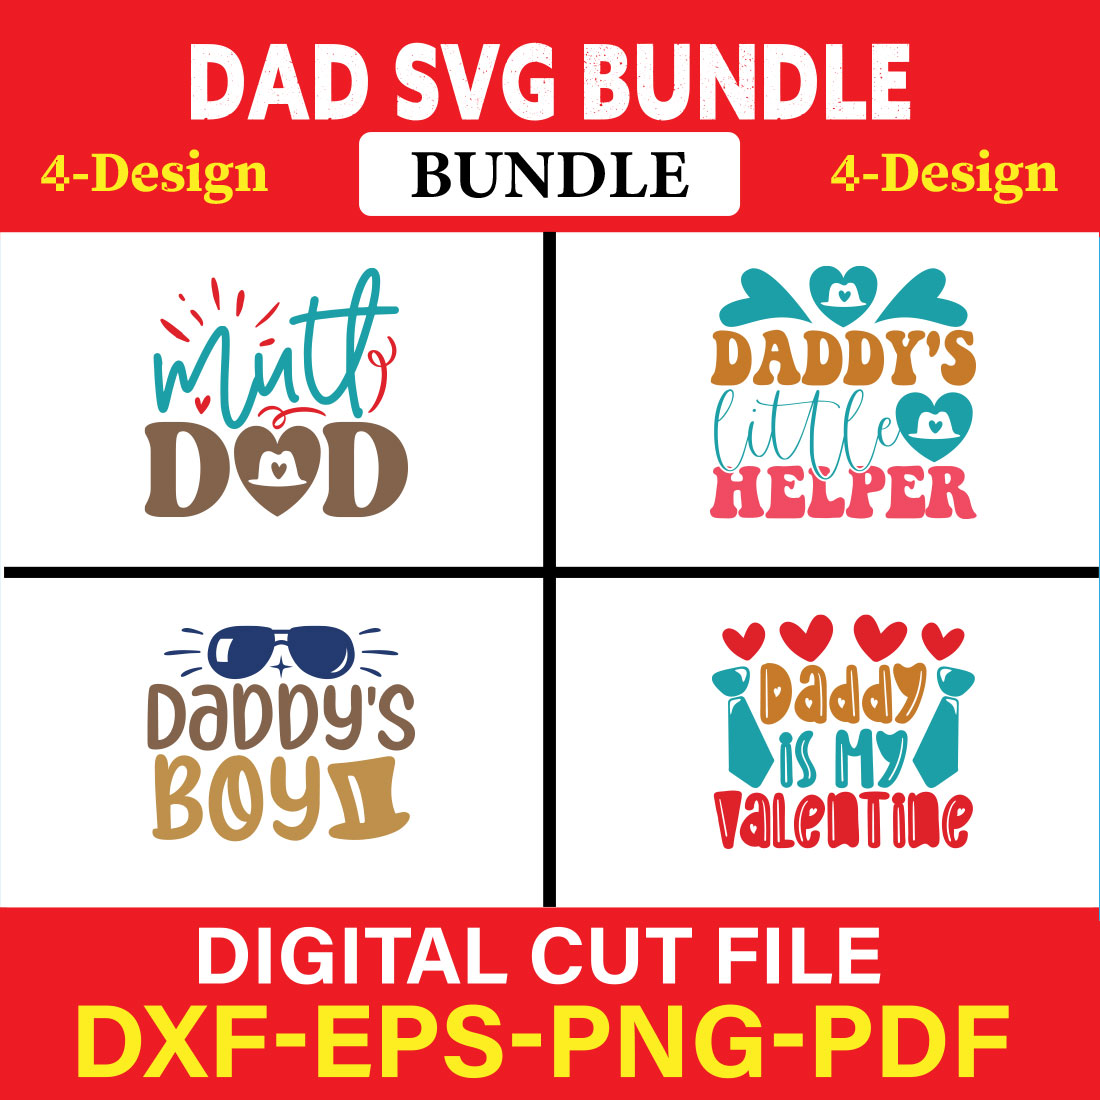 Dad T-shirt Design Bundle Vol-1 cover image.